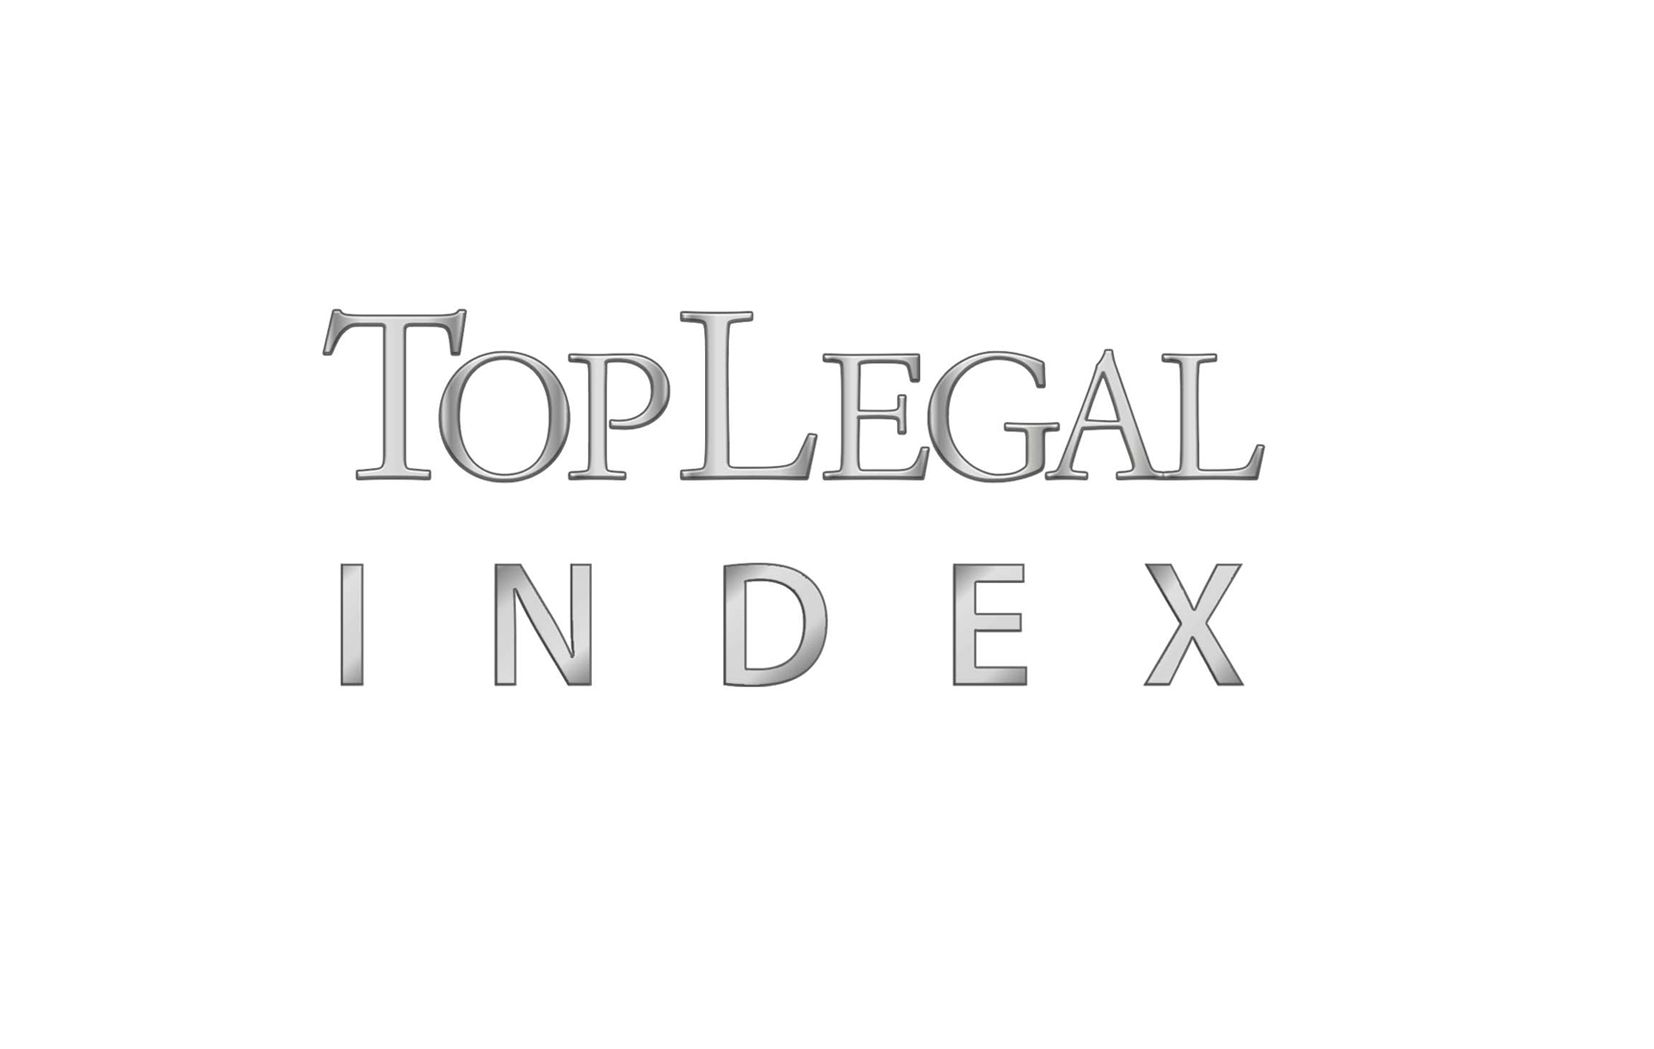 TopLegal Index stabile a metà dicembre